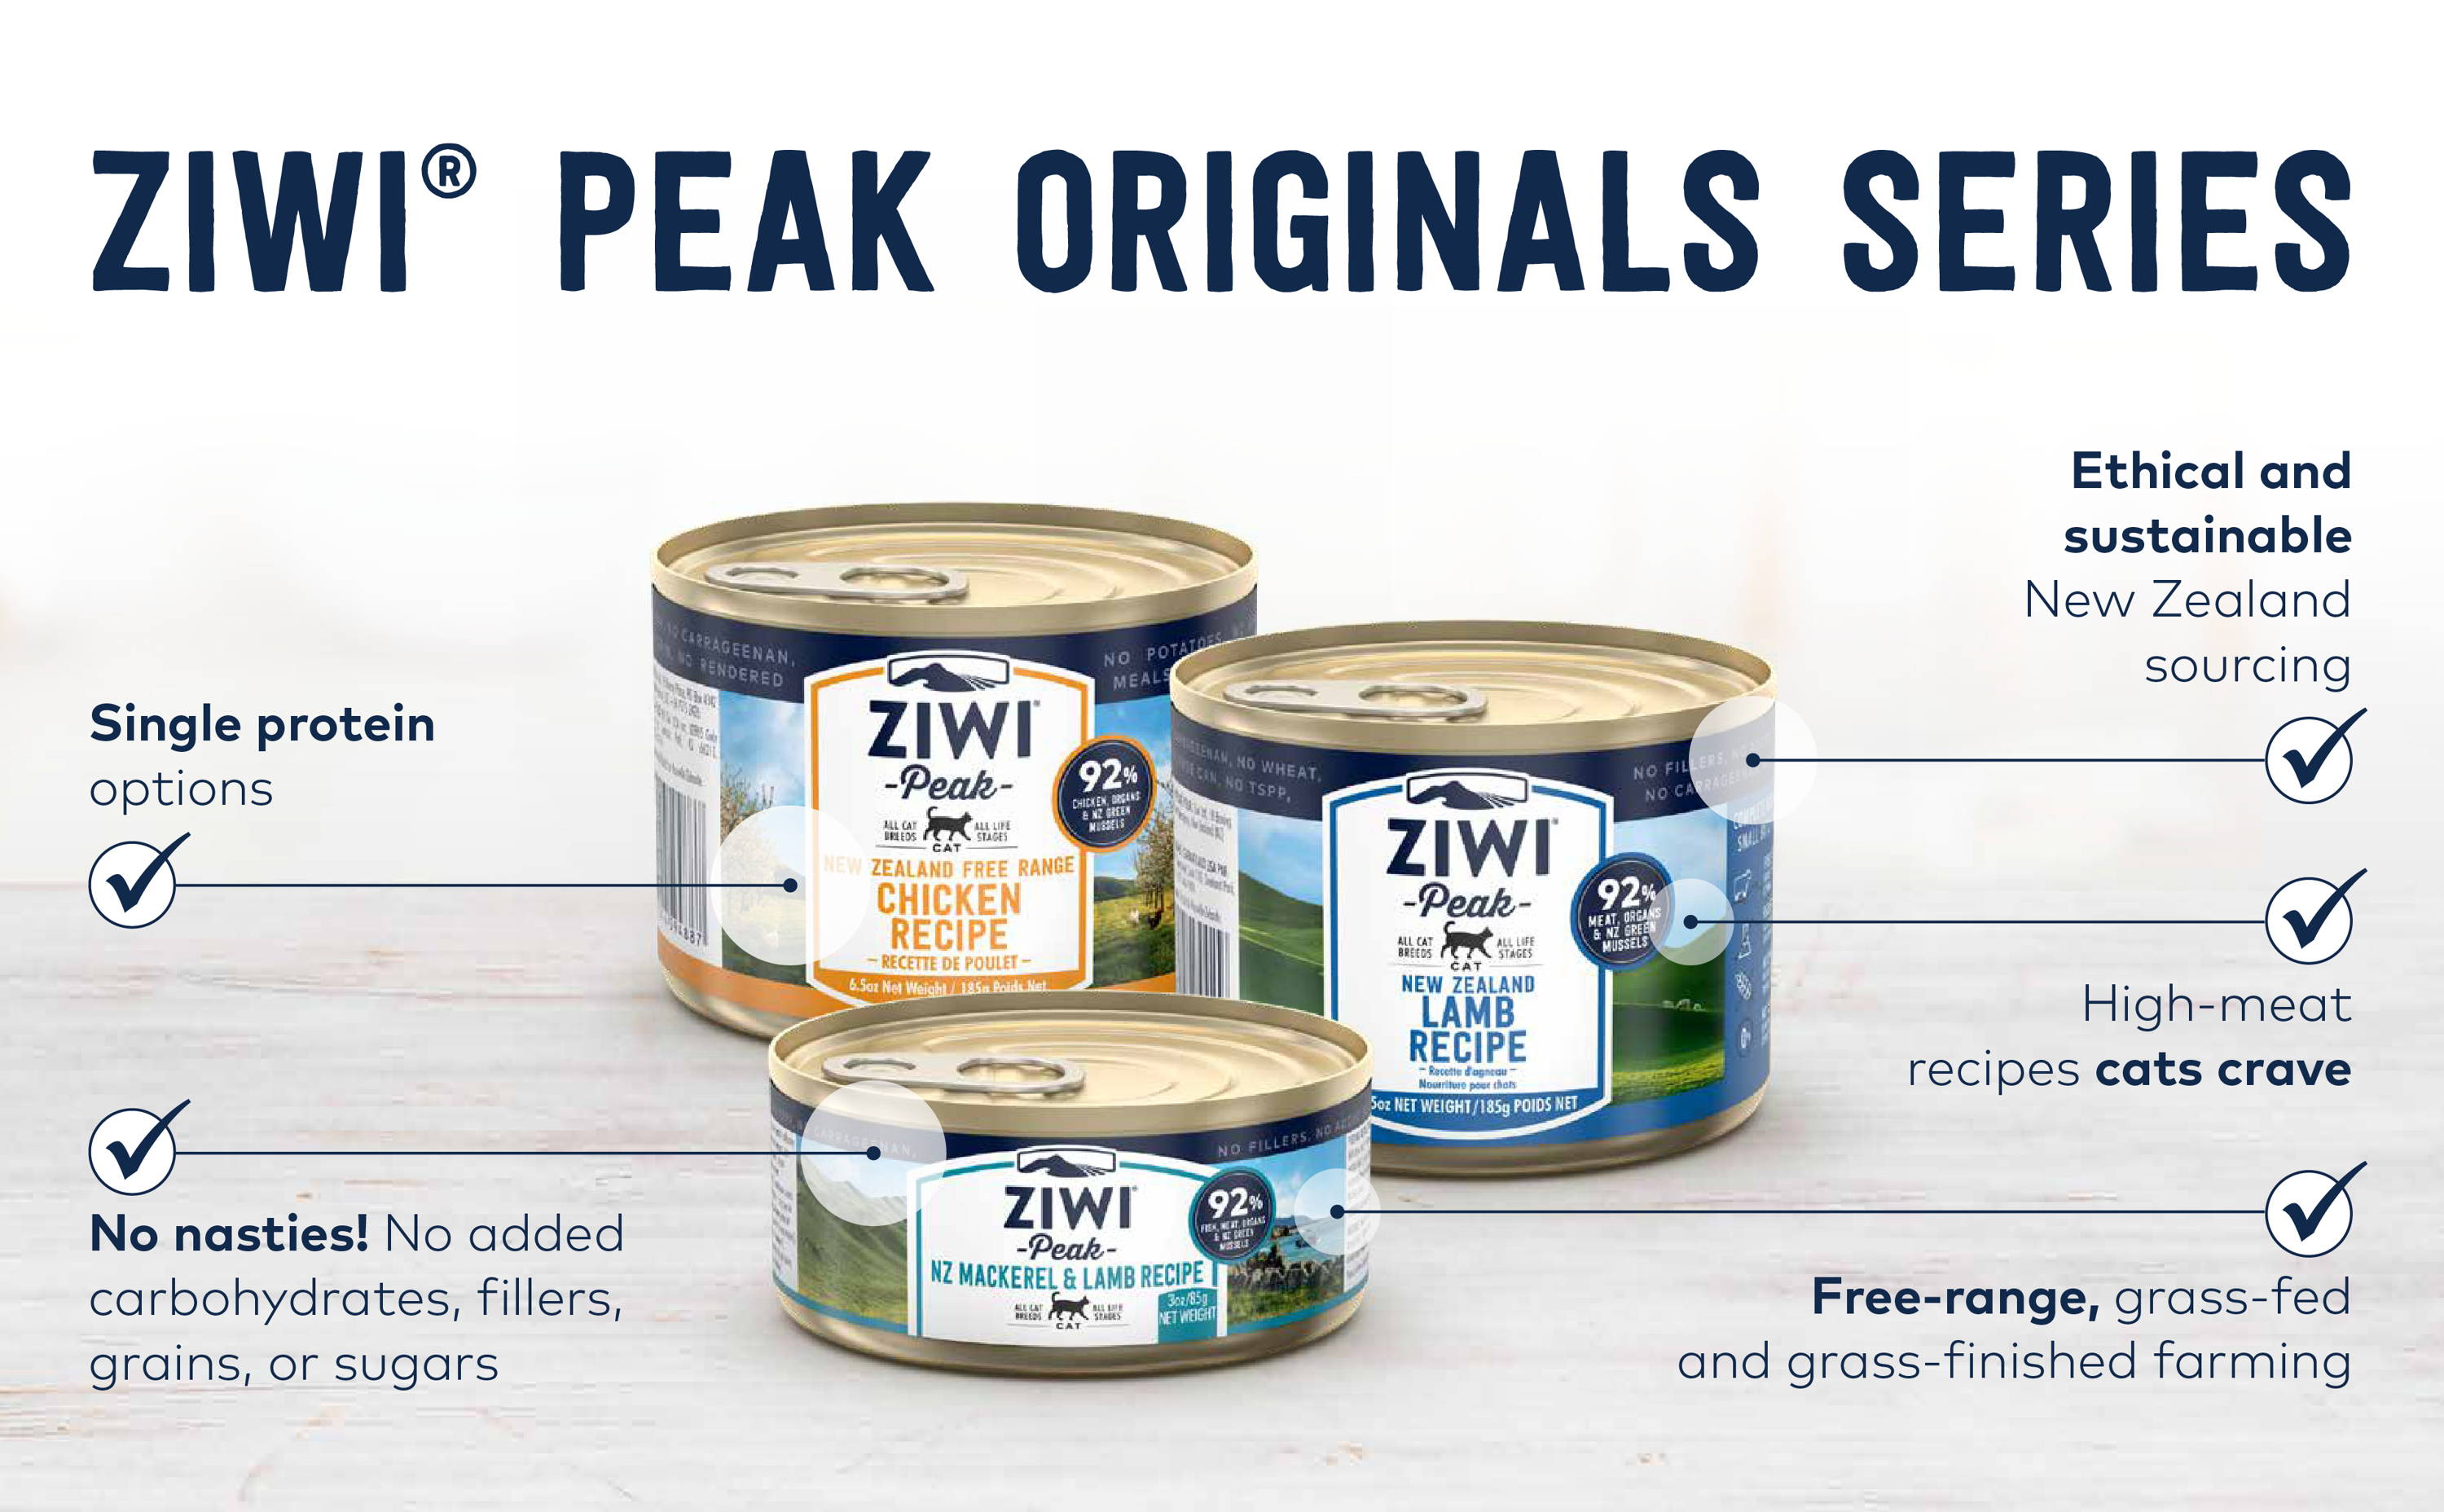 Ziwi Peak Originals Series